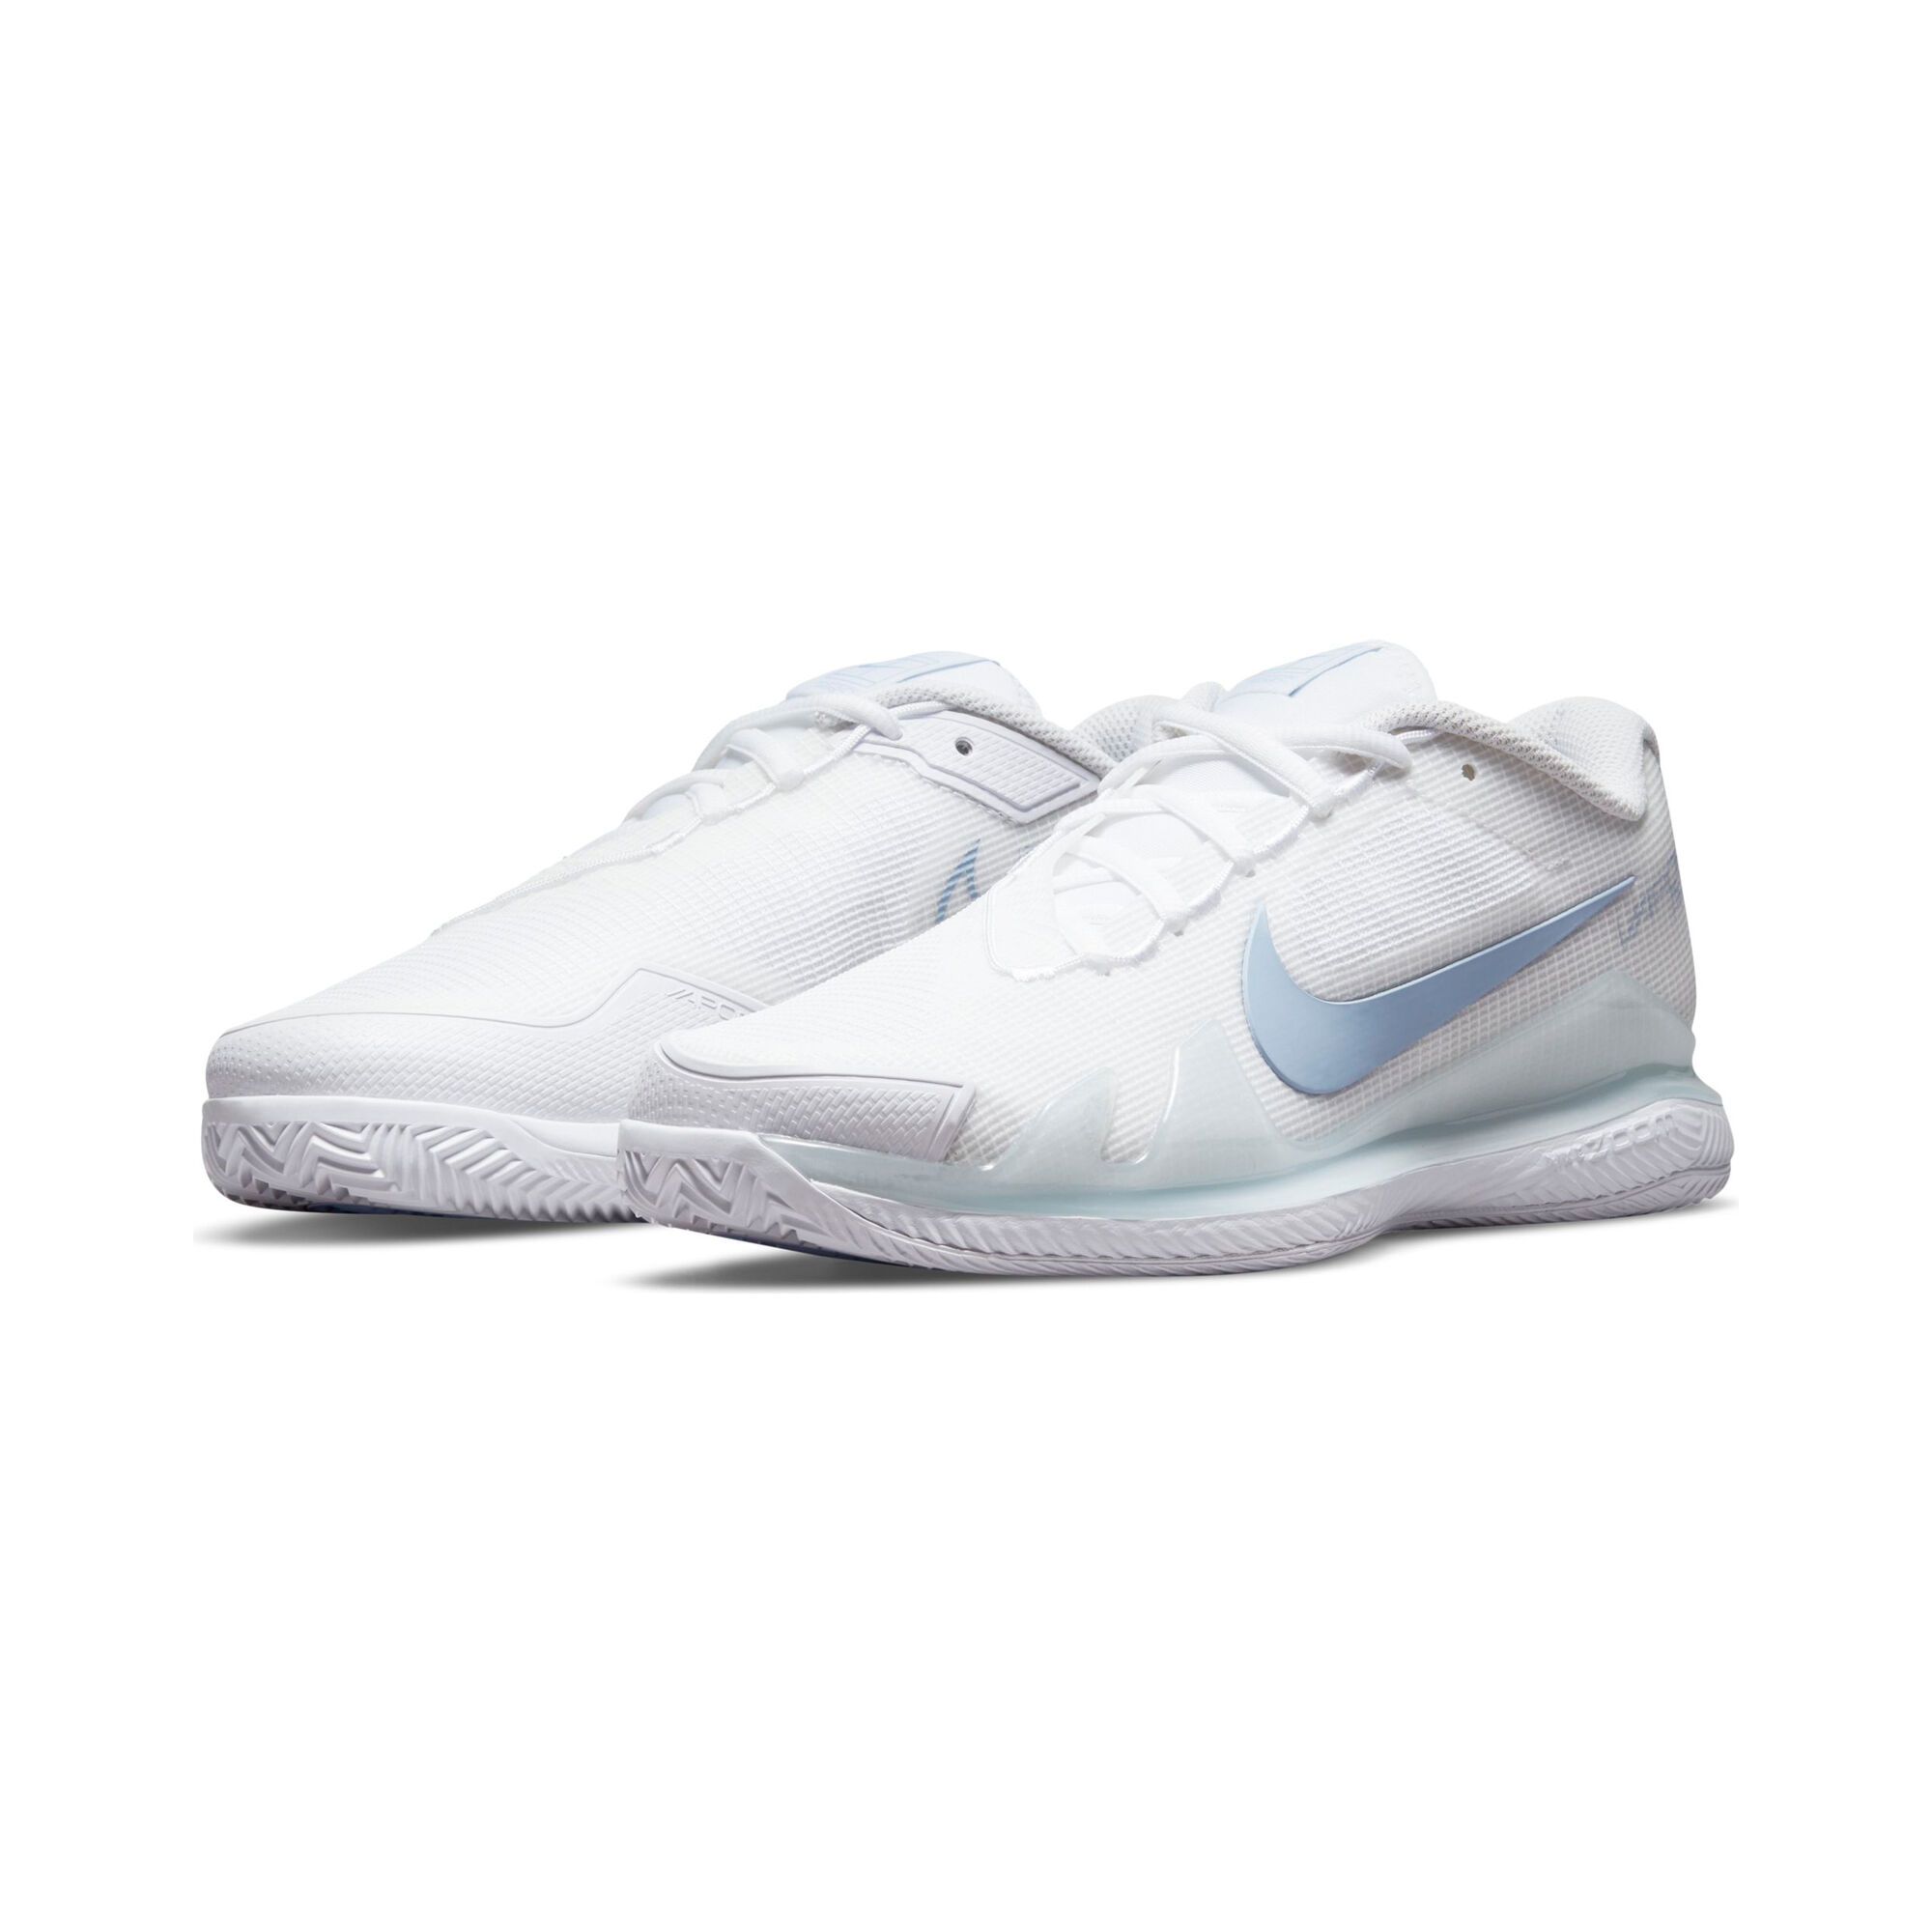 buy Nike Air Zoom Vapor Pro Clay Court Shoe Women - White, Light Blue ...